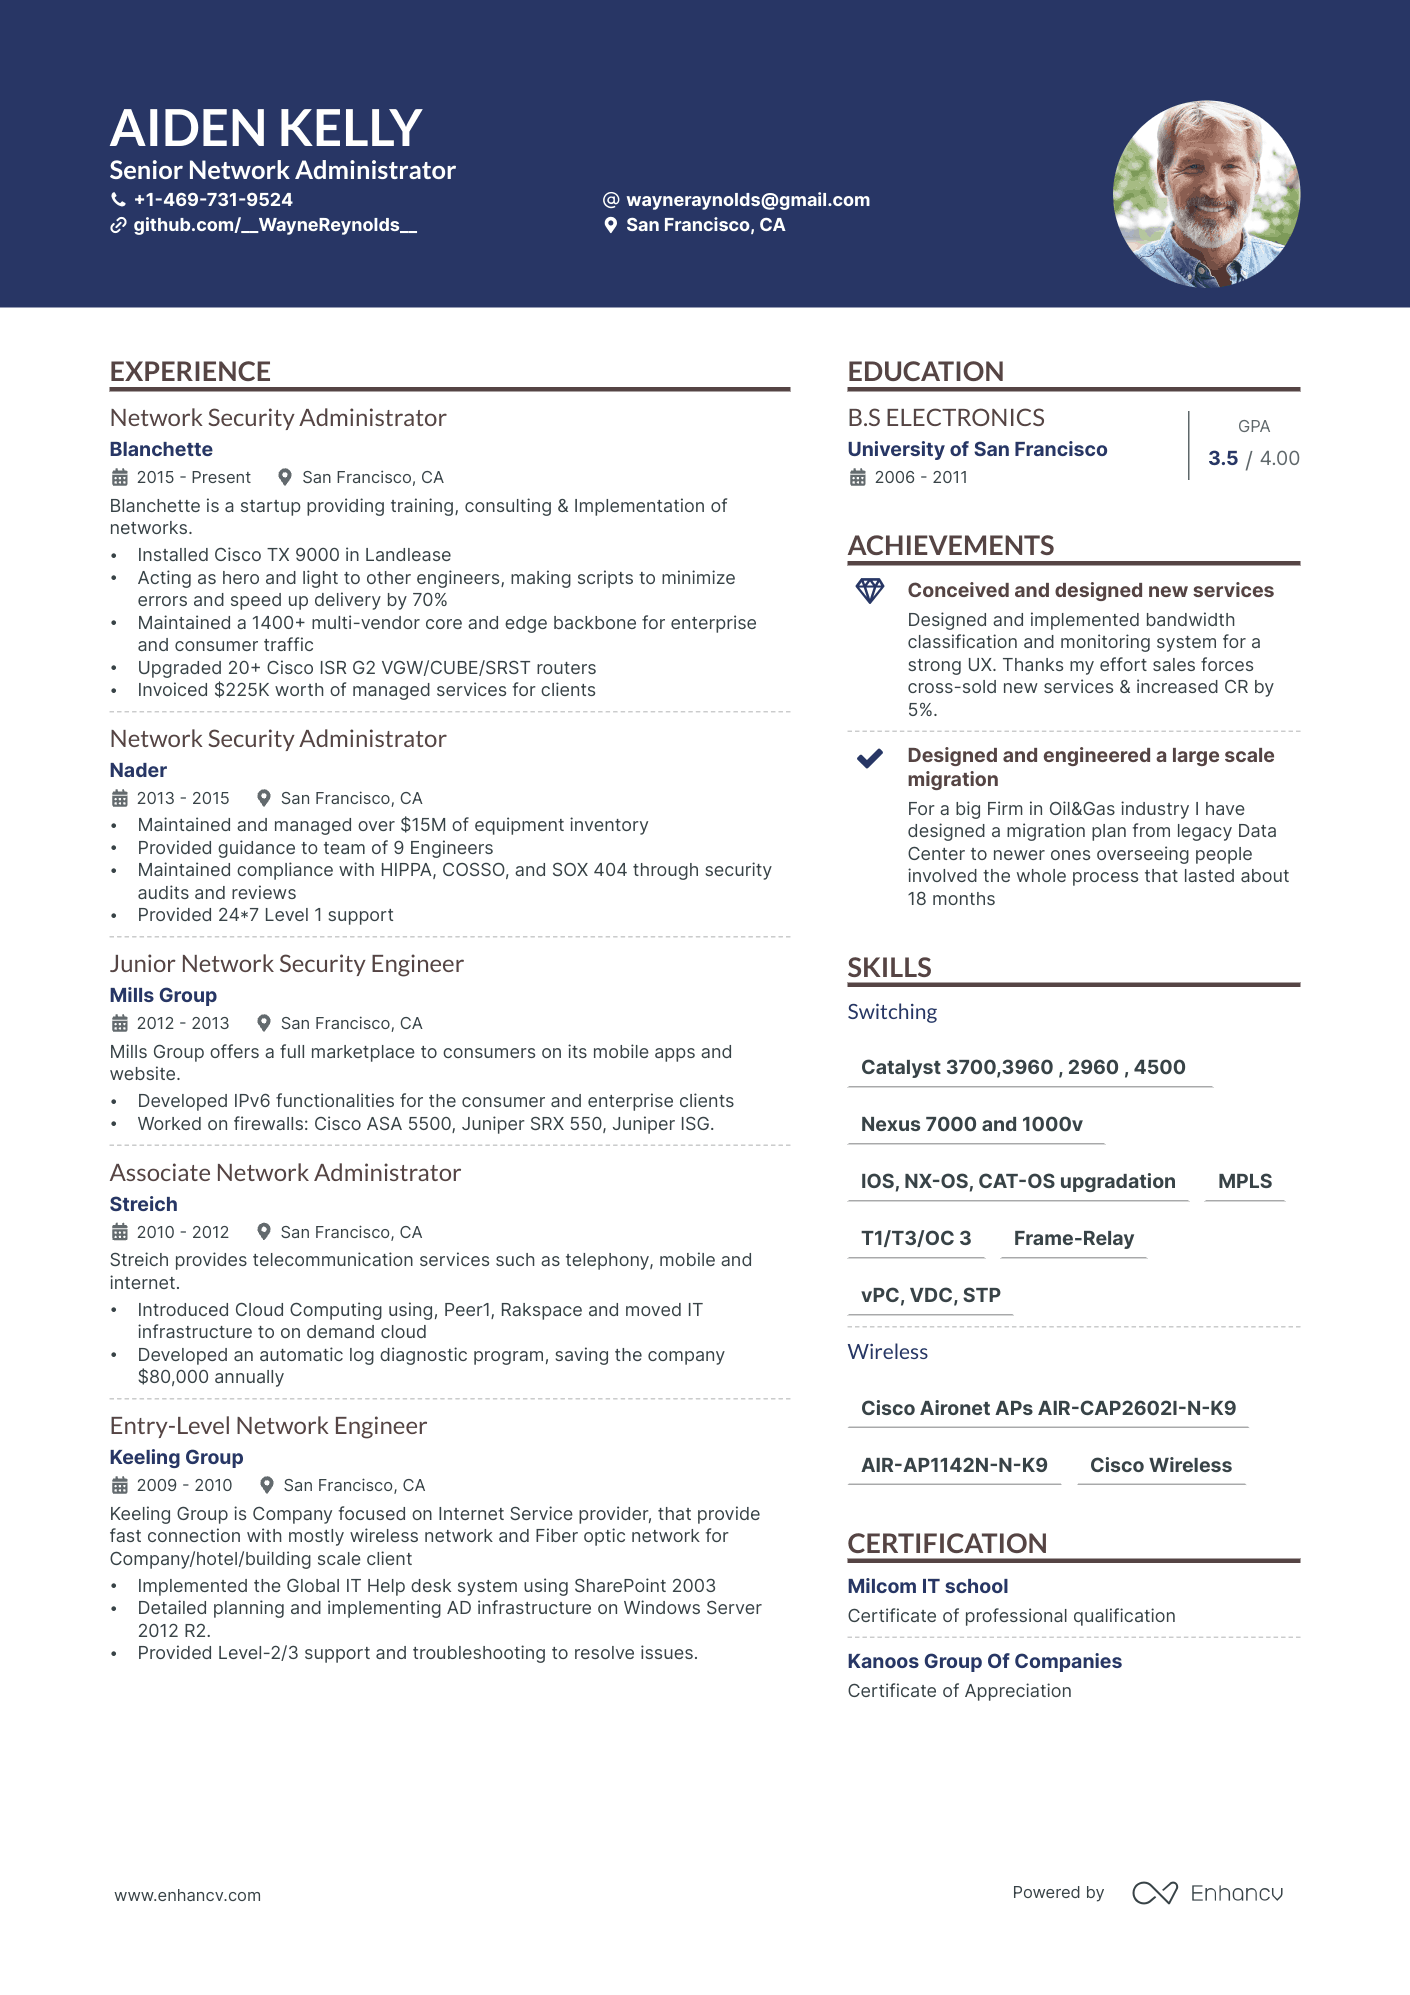 Senior Network Administrator resume example